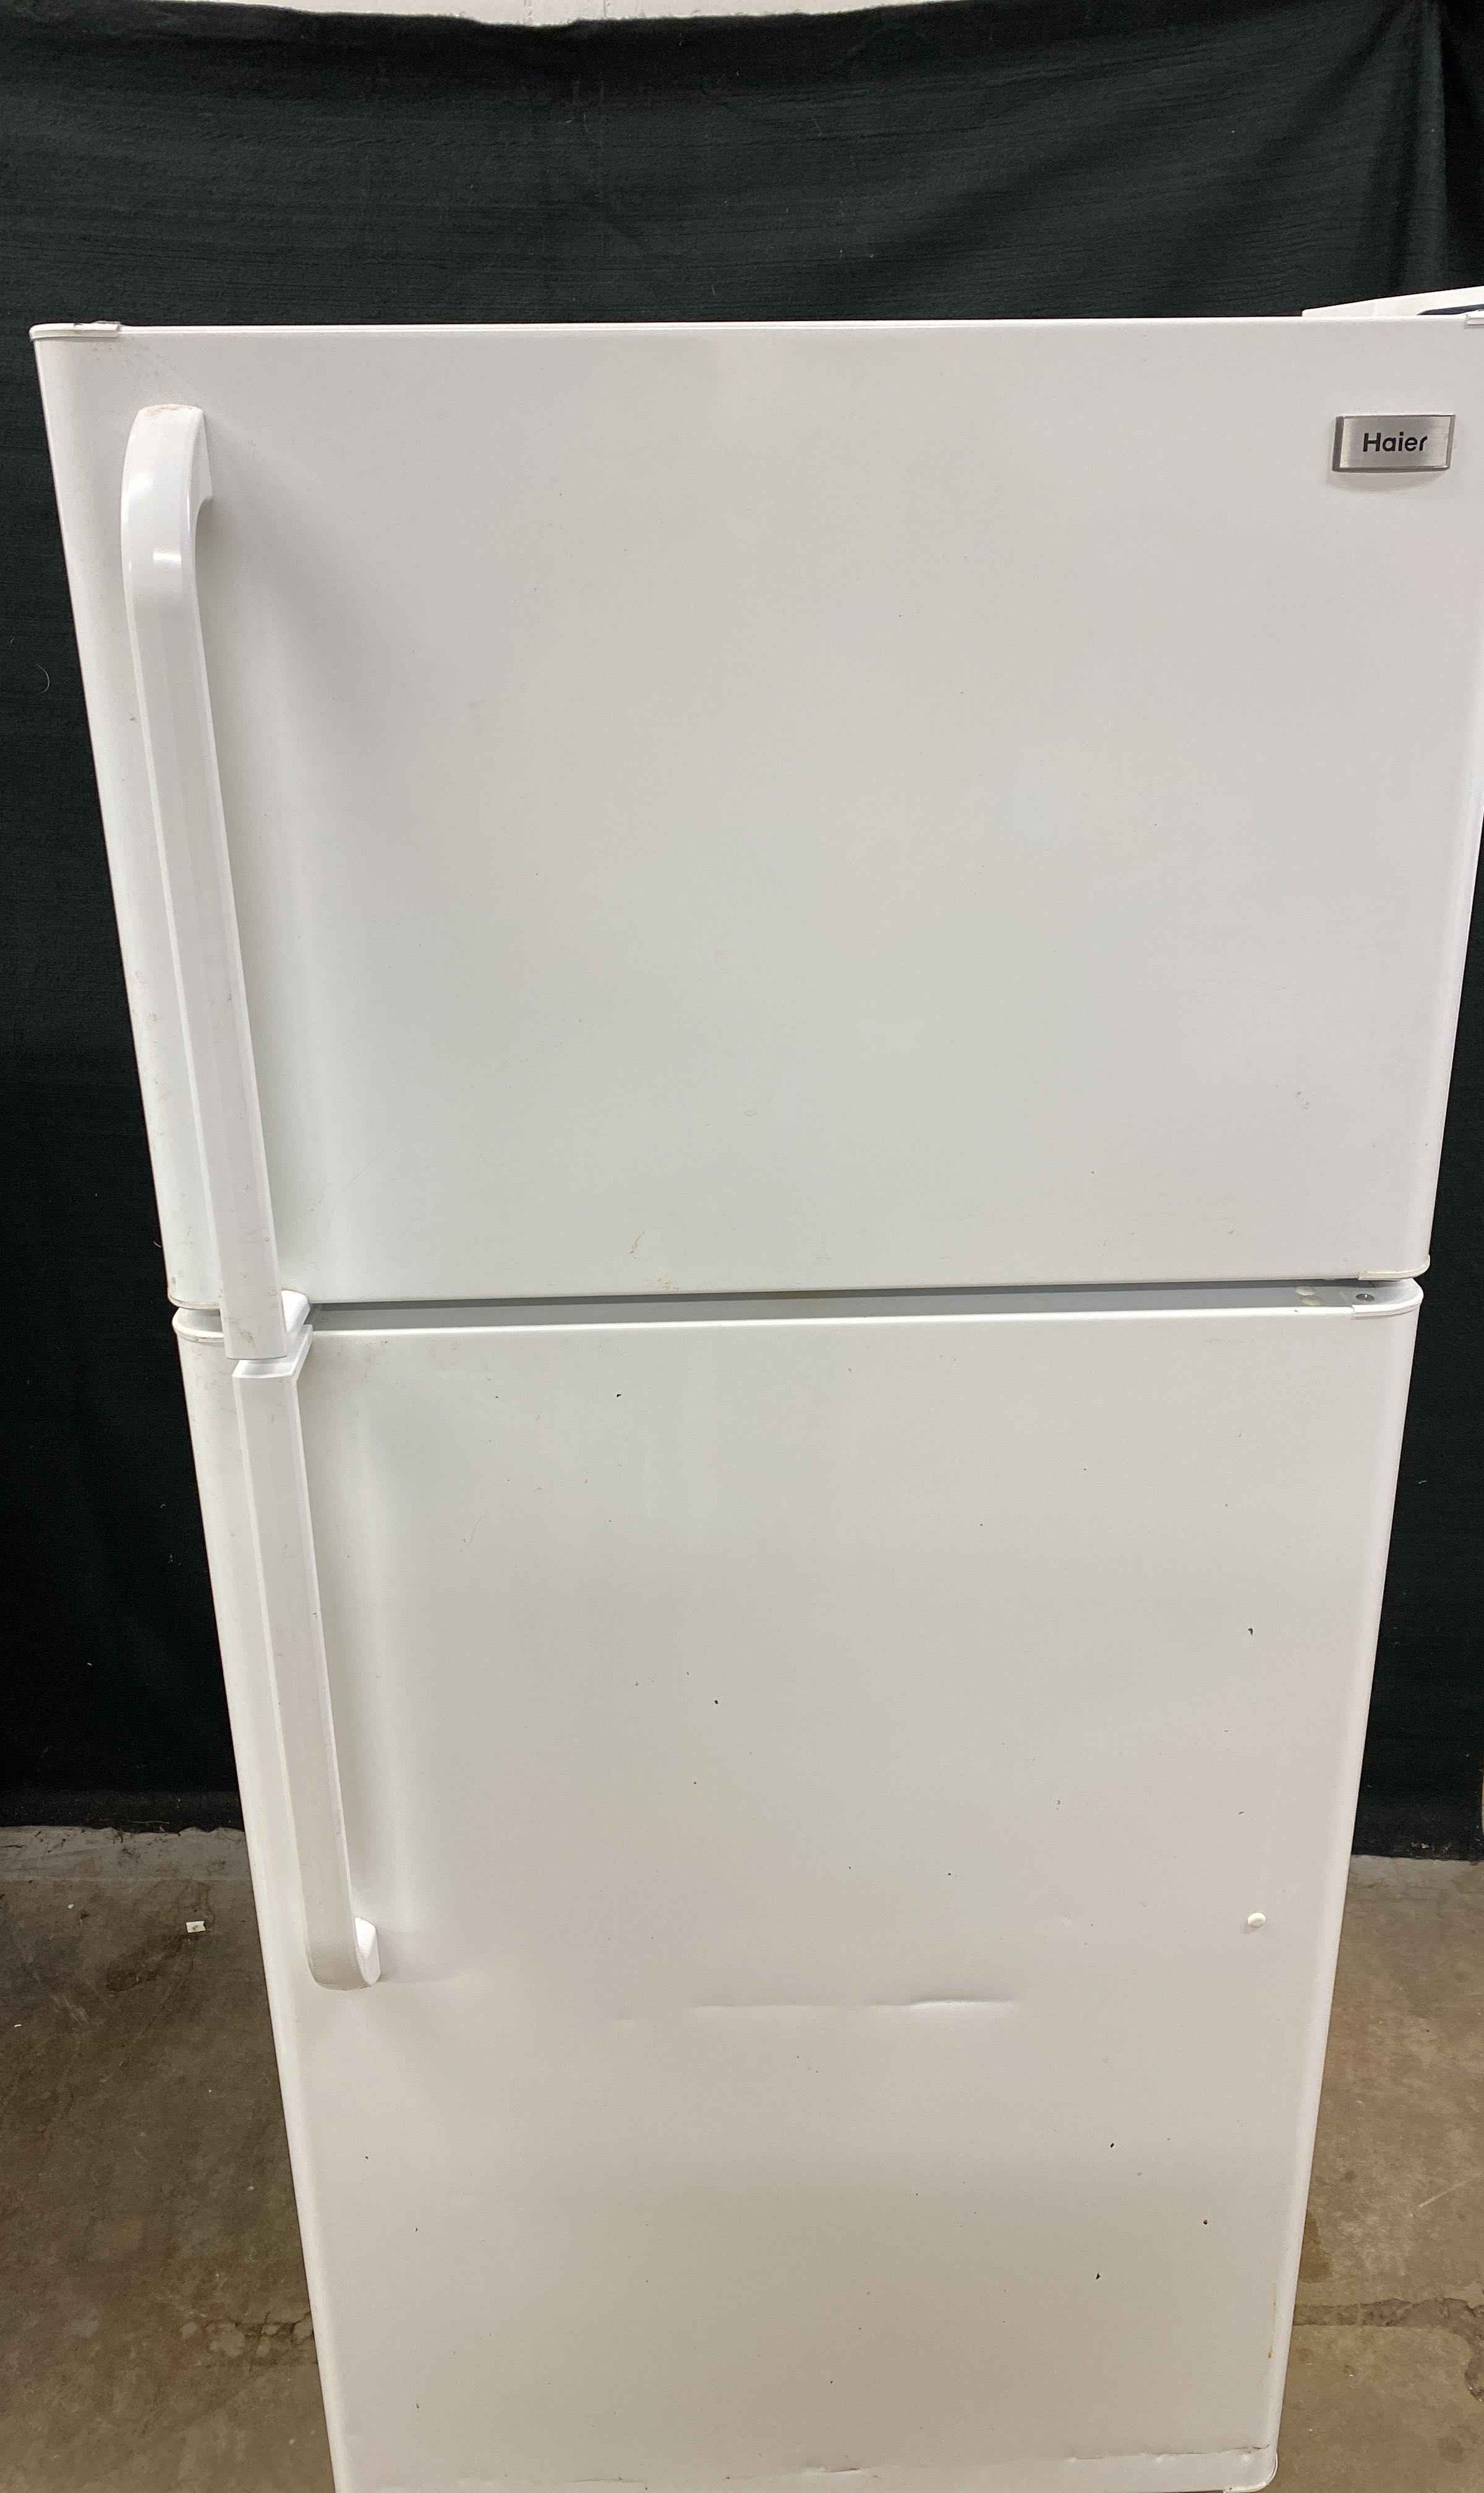 Haier mini refrigerator - McLaughlin Auctioneers, LLC